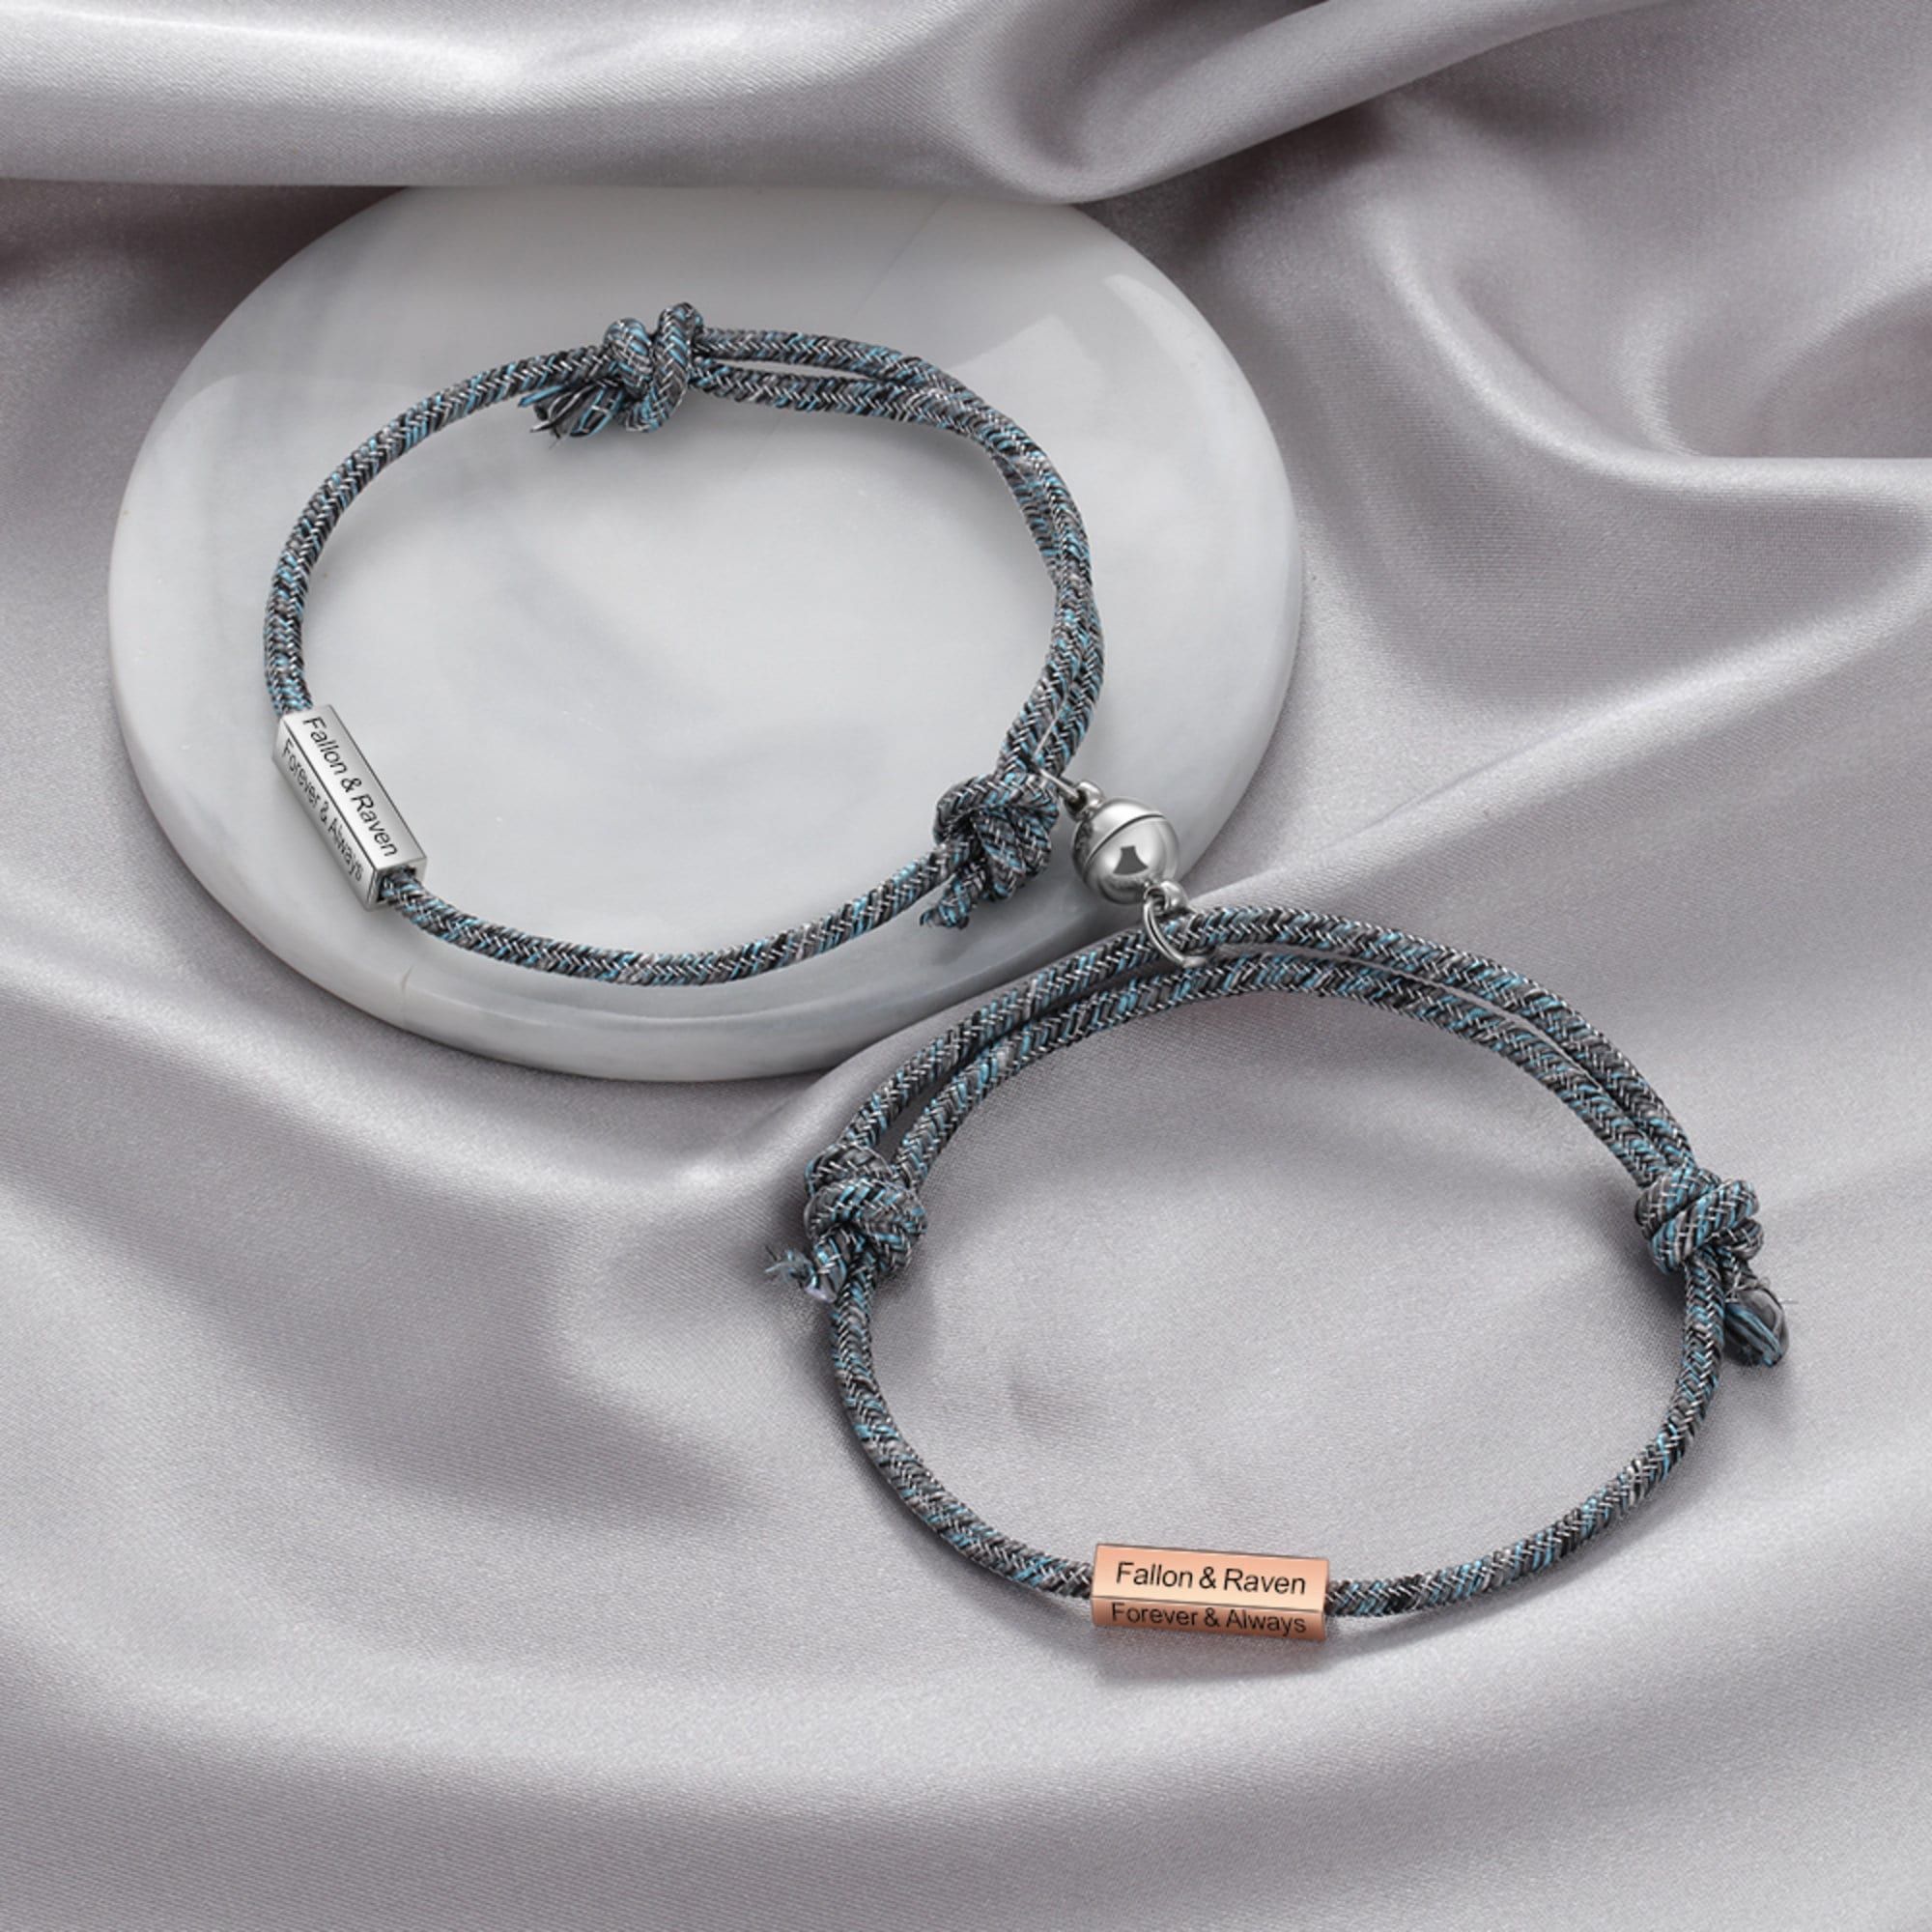 Magnetic Couple Bracelets True Love | My Couple Goal